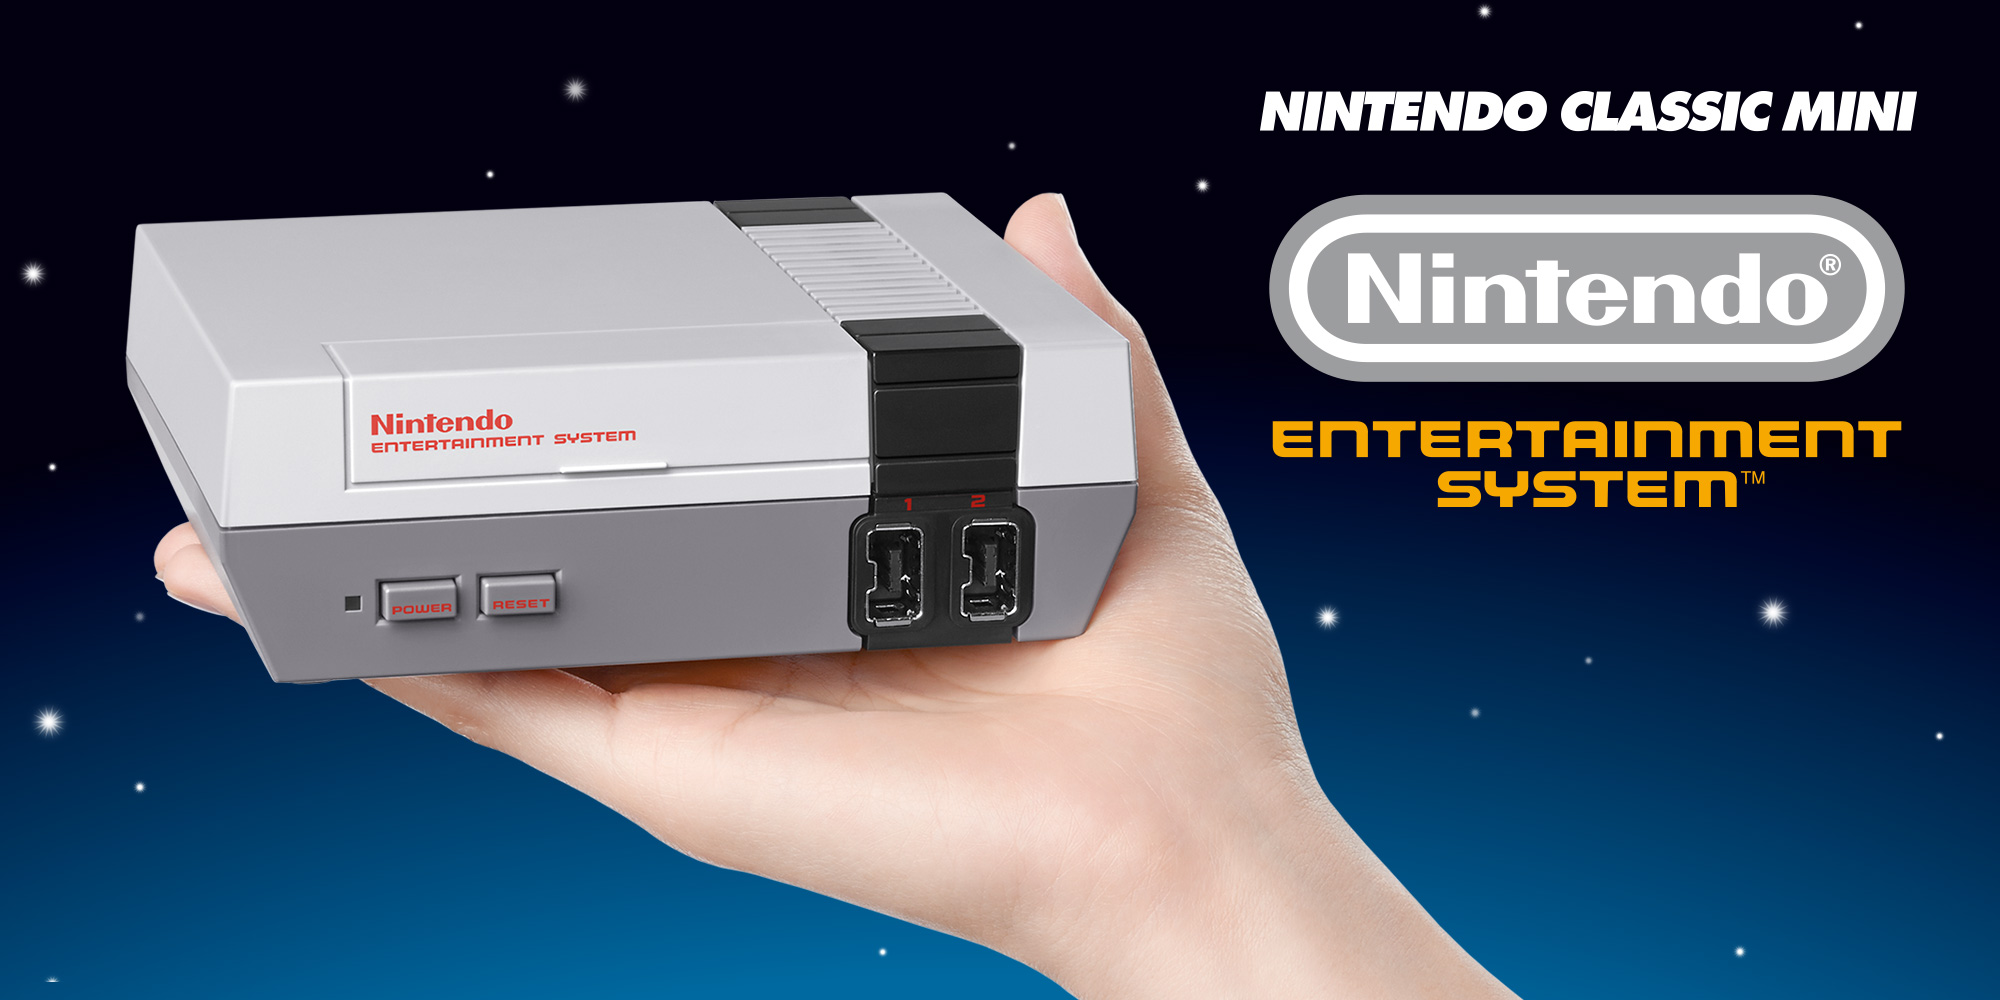 La console Nintendo Classic Mini: Nintendo Entertainment System sera disponible le 11 novembre et proposera 30 classiques de la NES